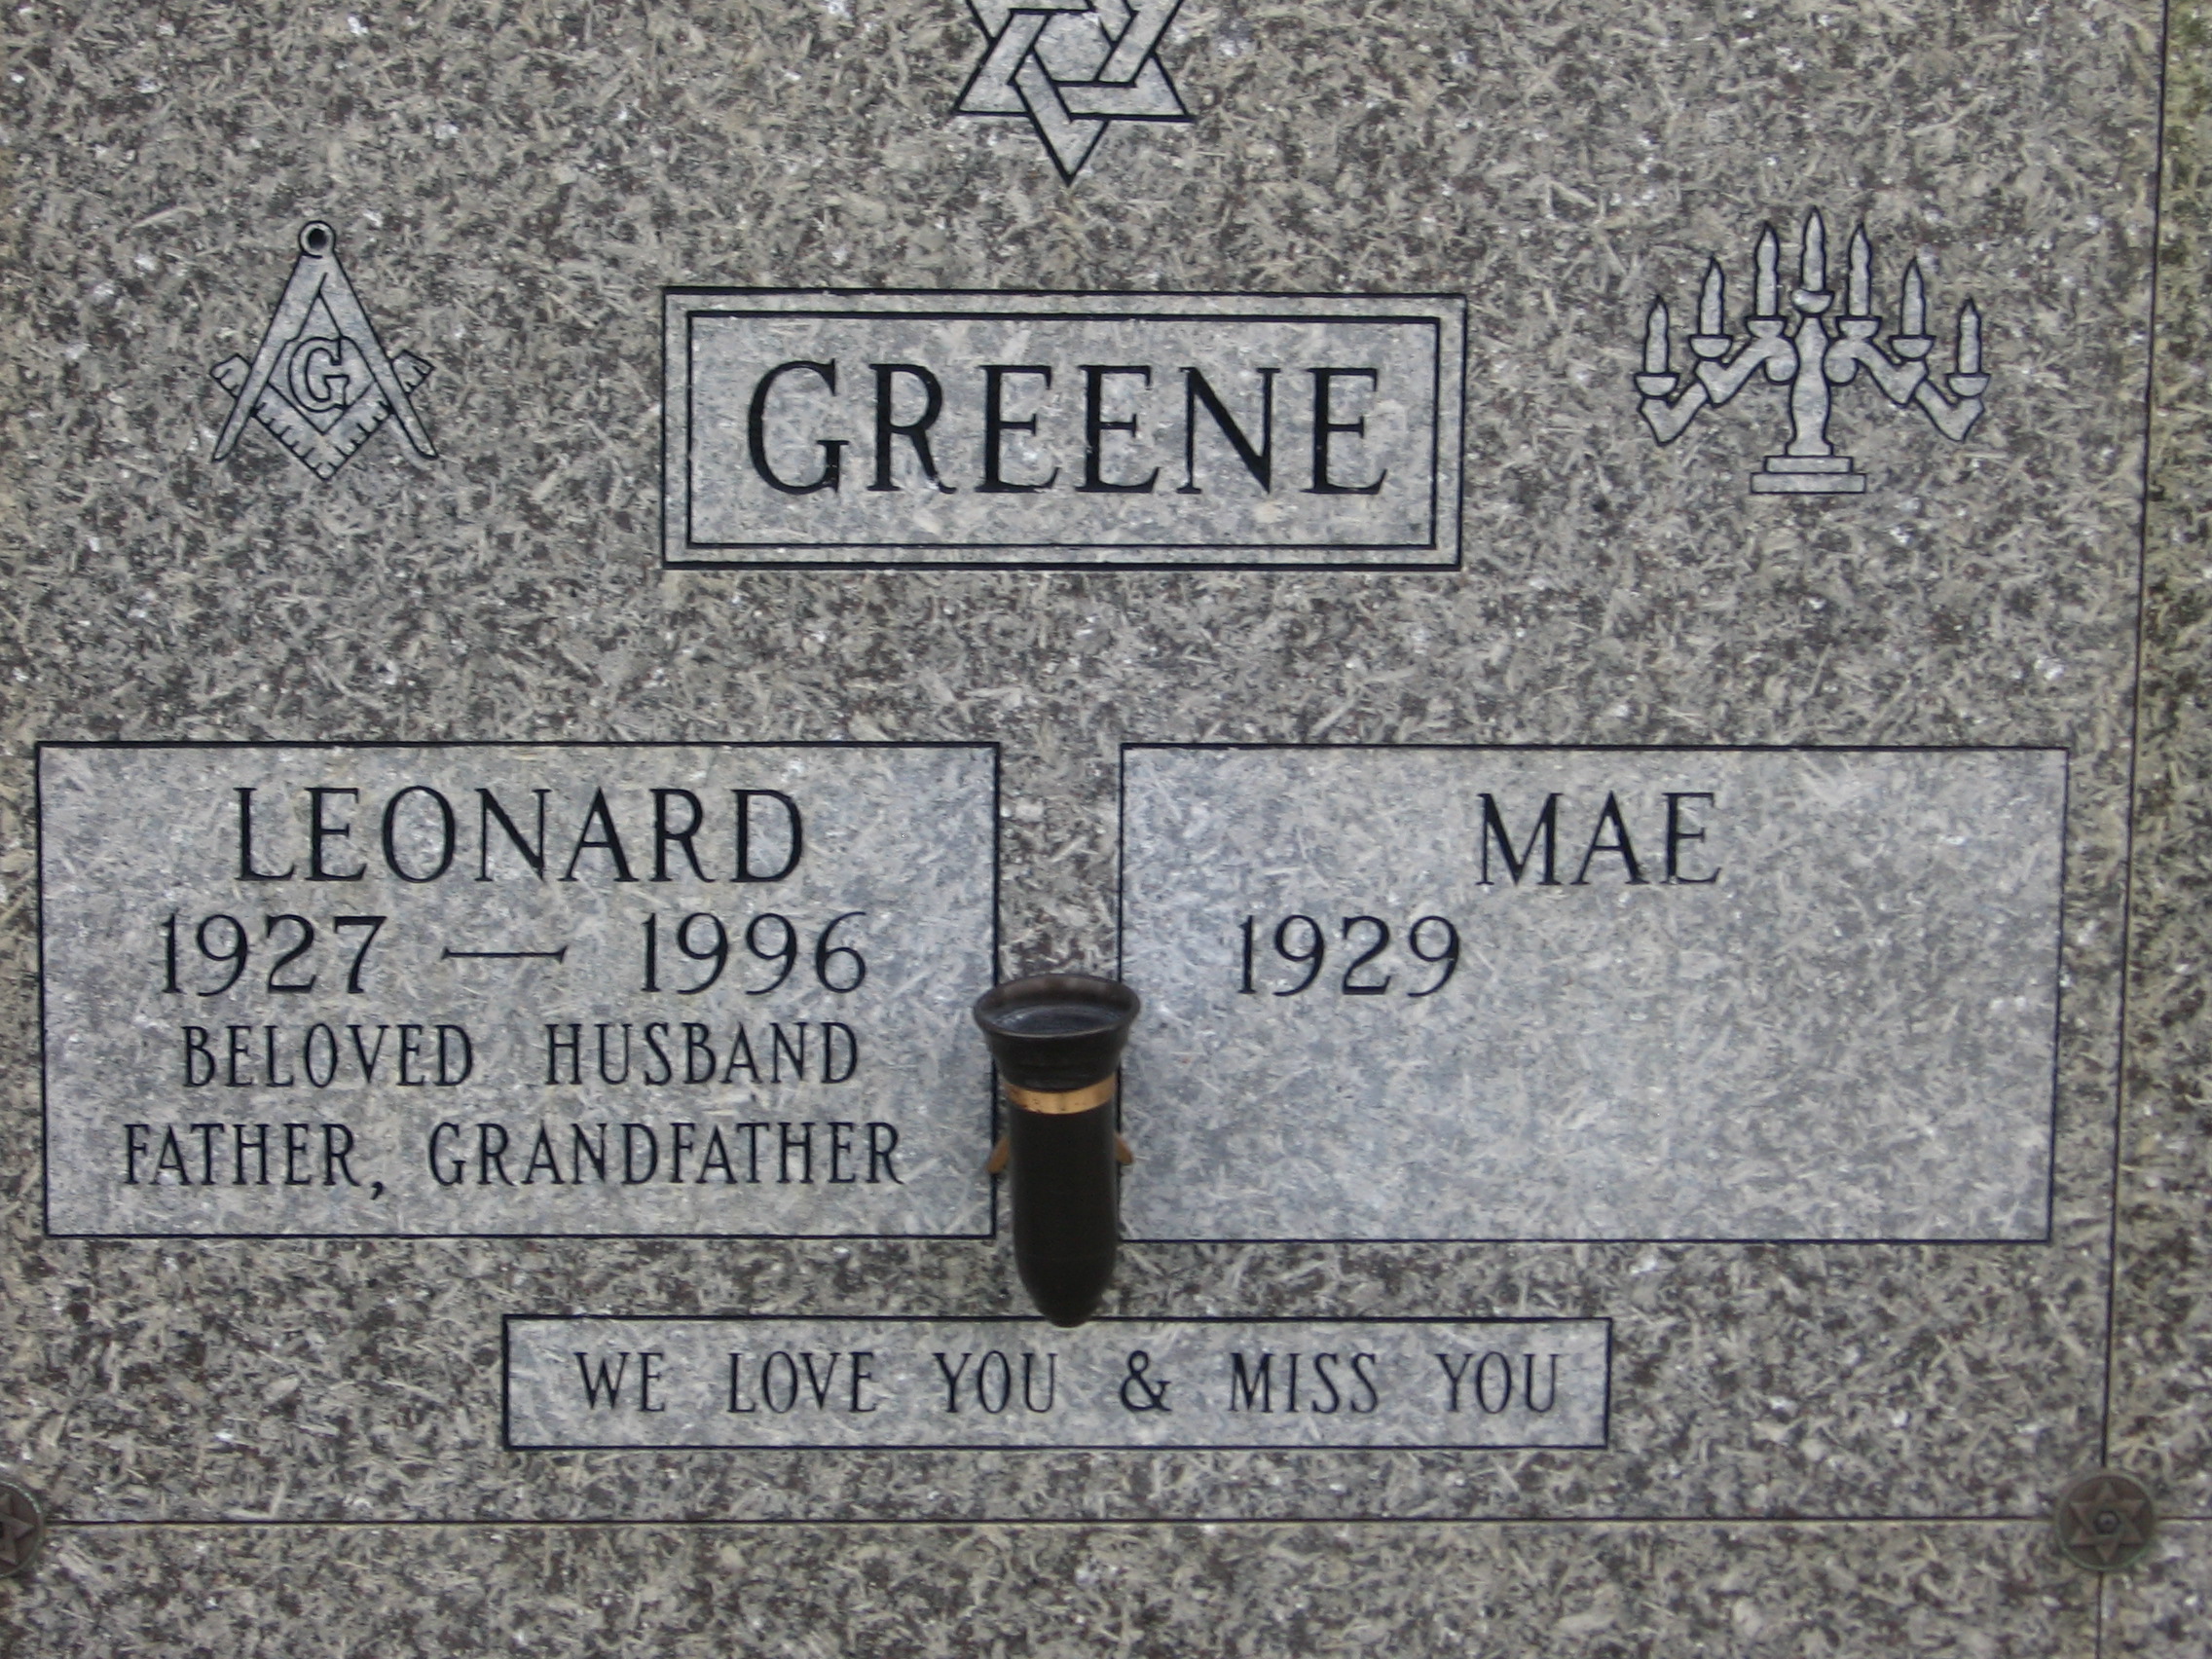 Leonard Greene